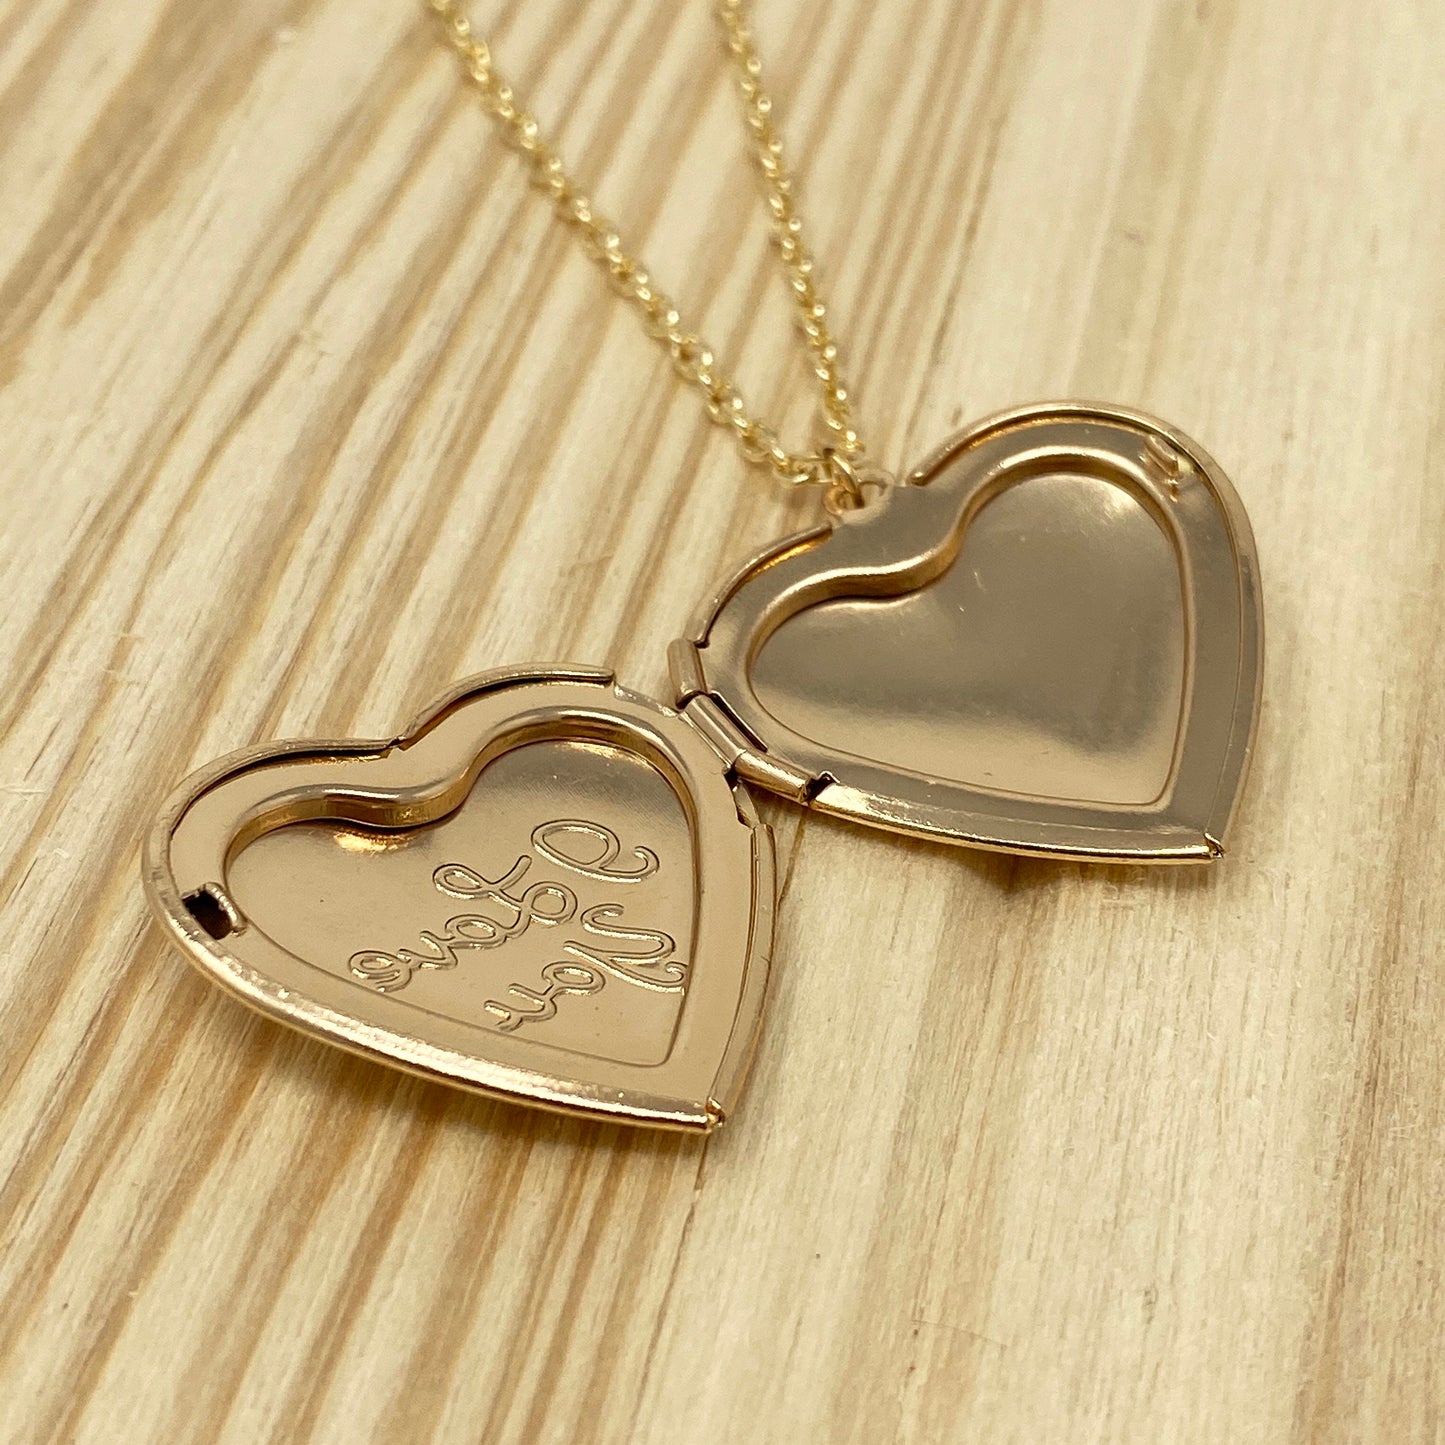 "I Love You" Heart Locket Necklace